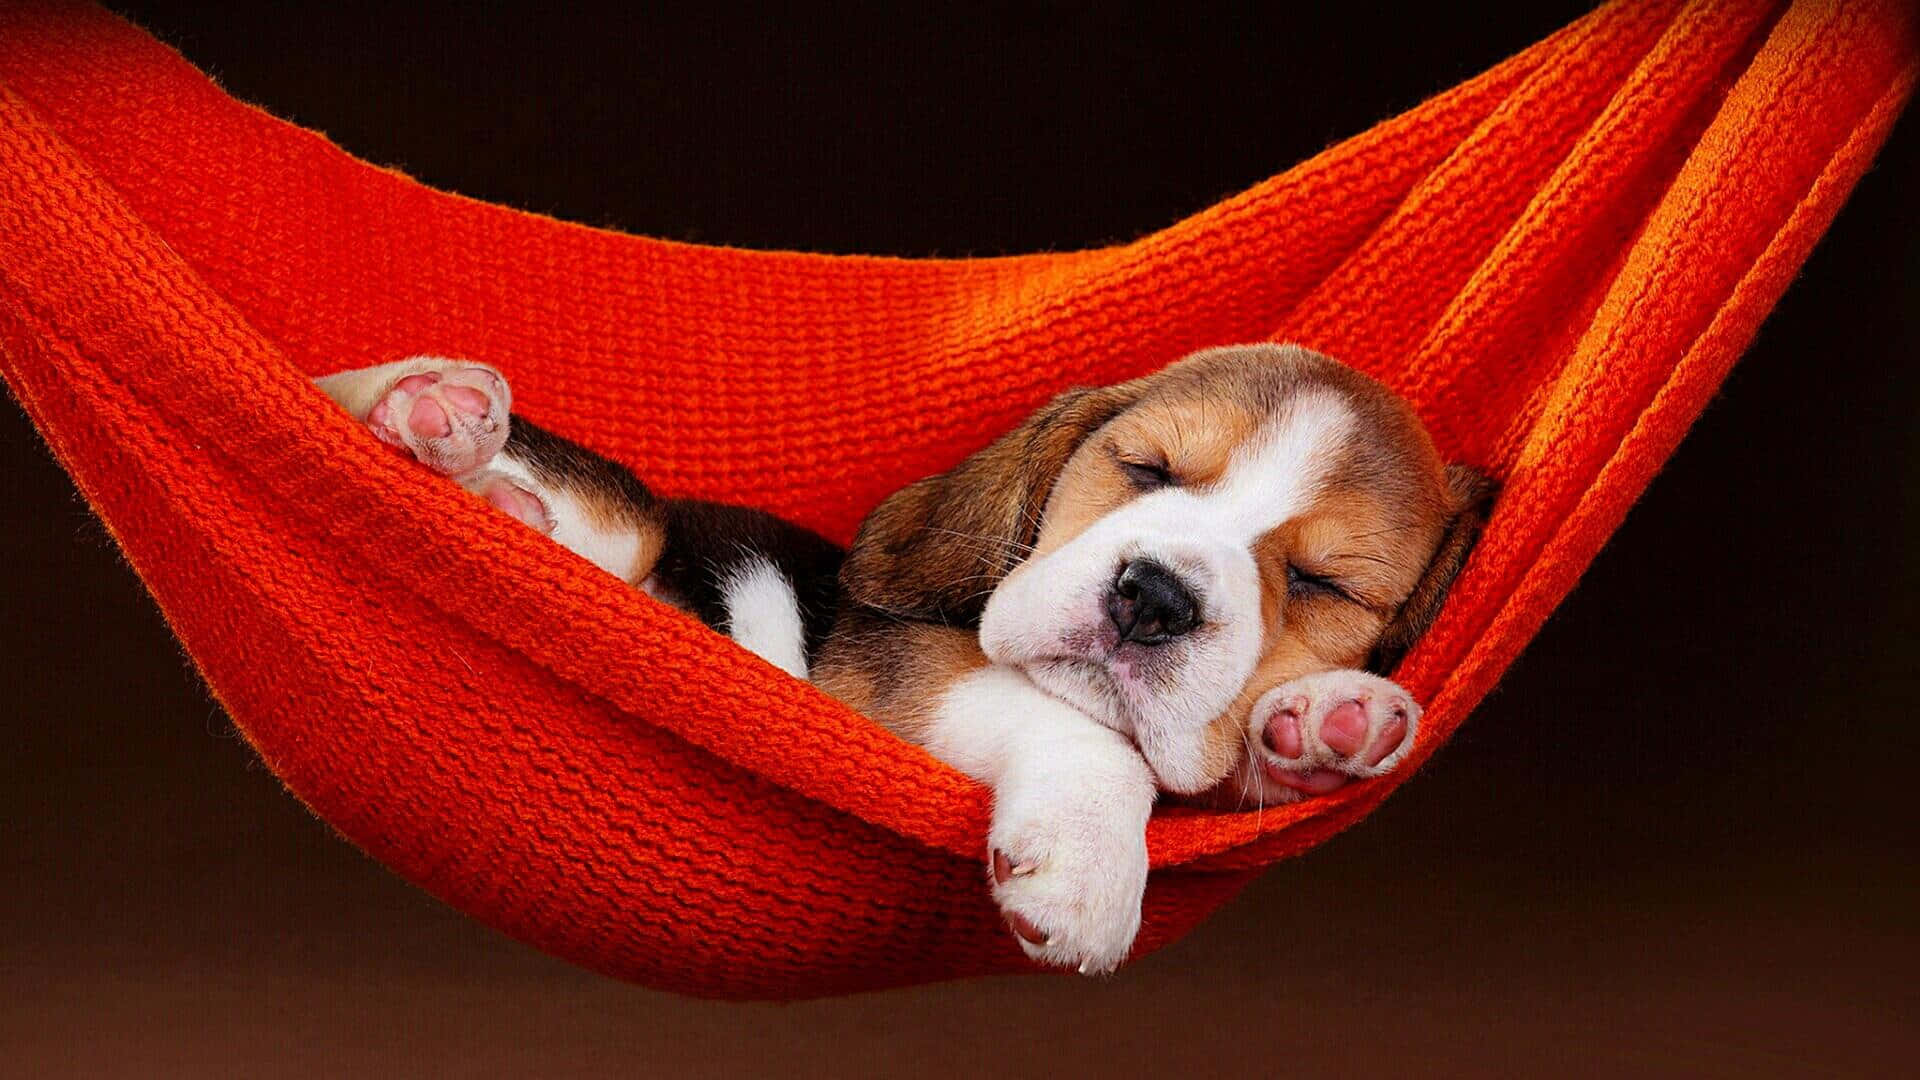 Beautiful Dog Sleeping Hammock Picture